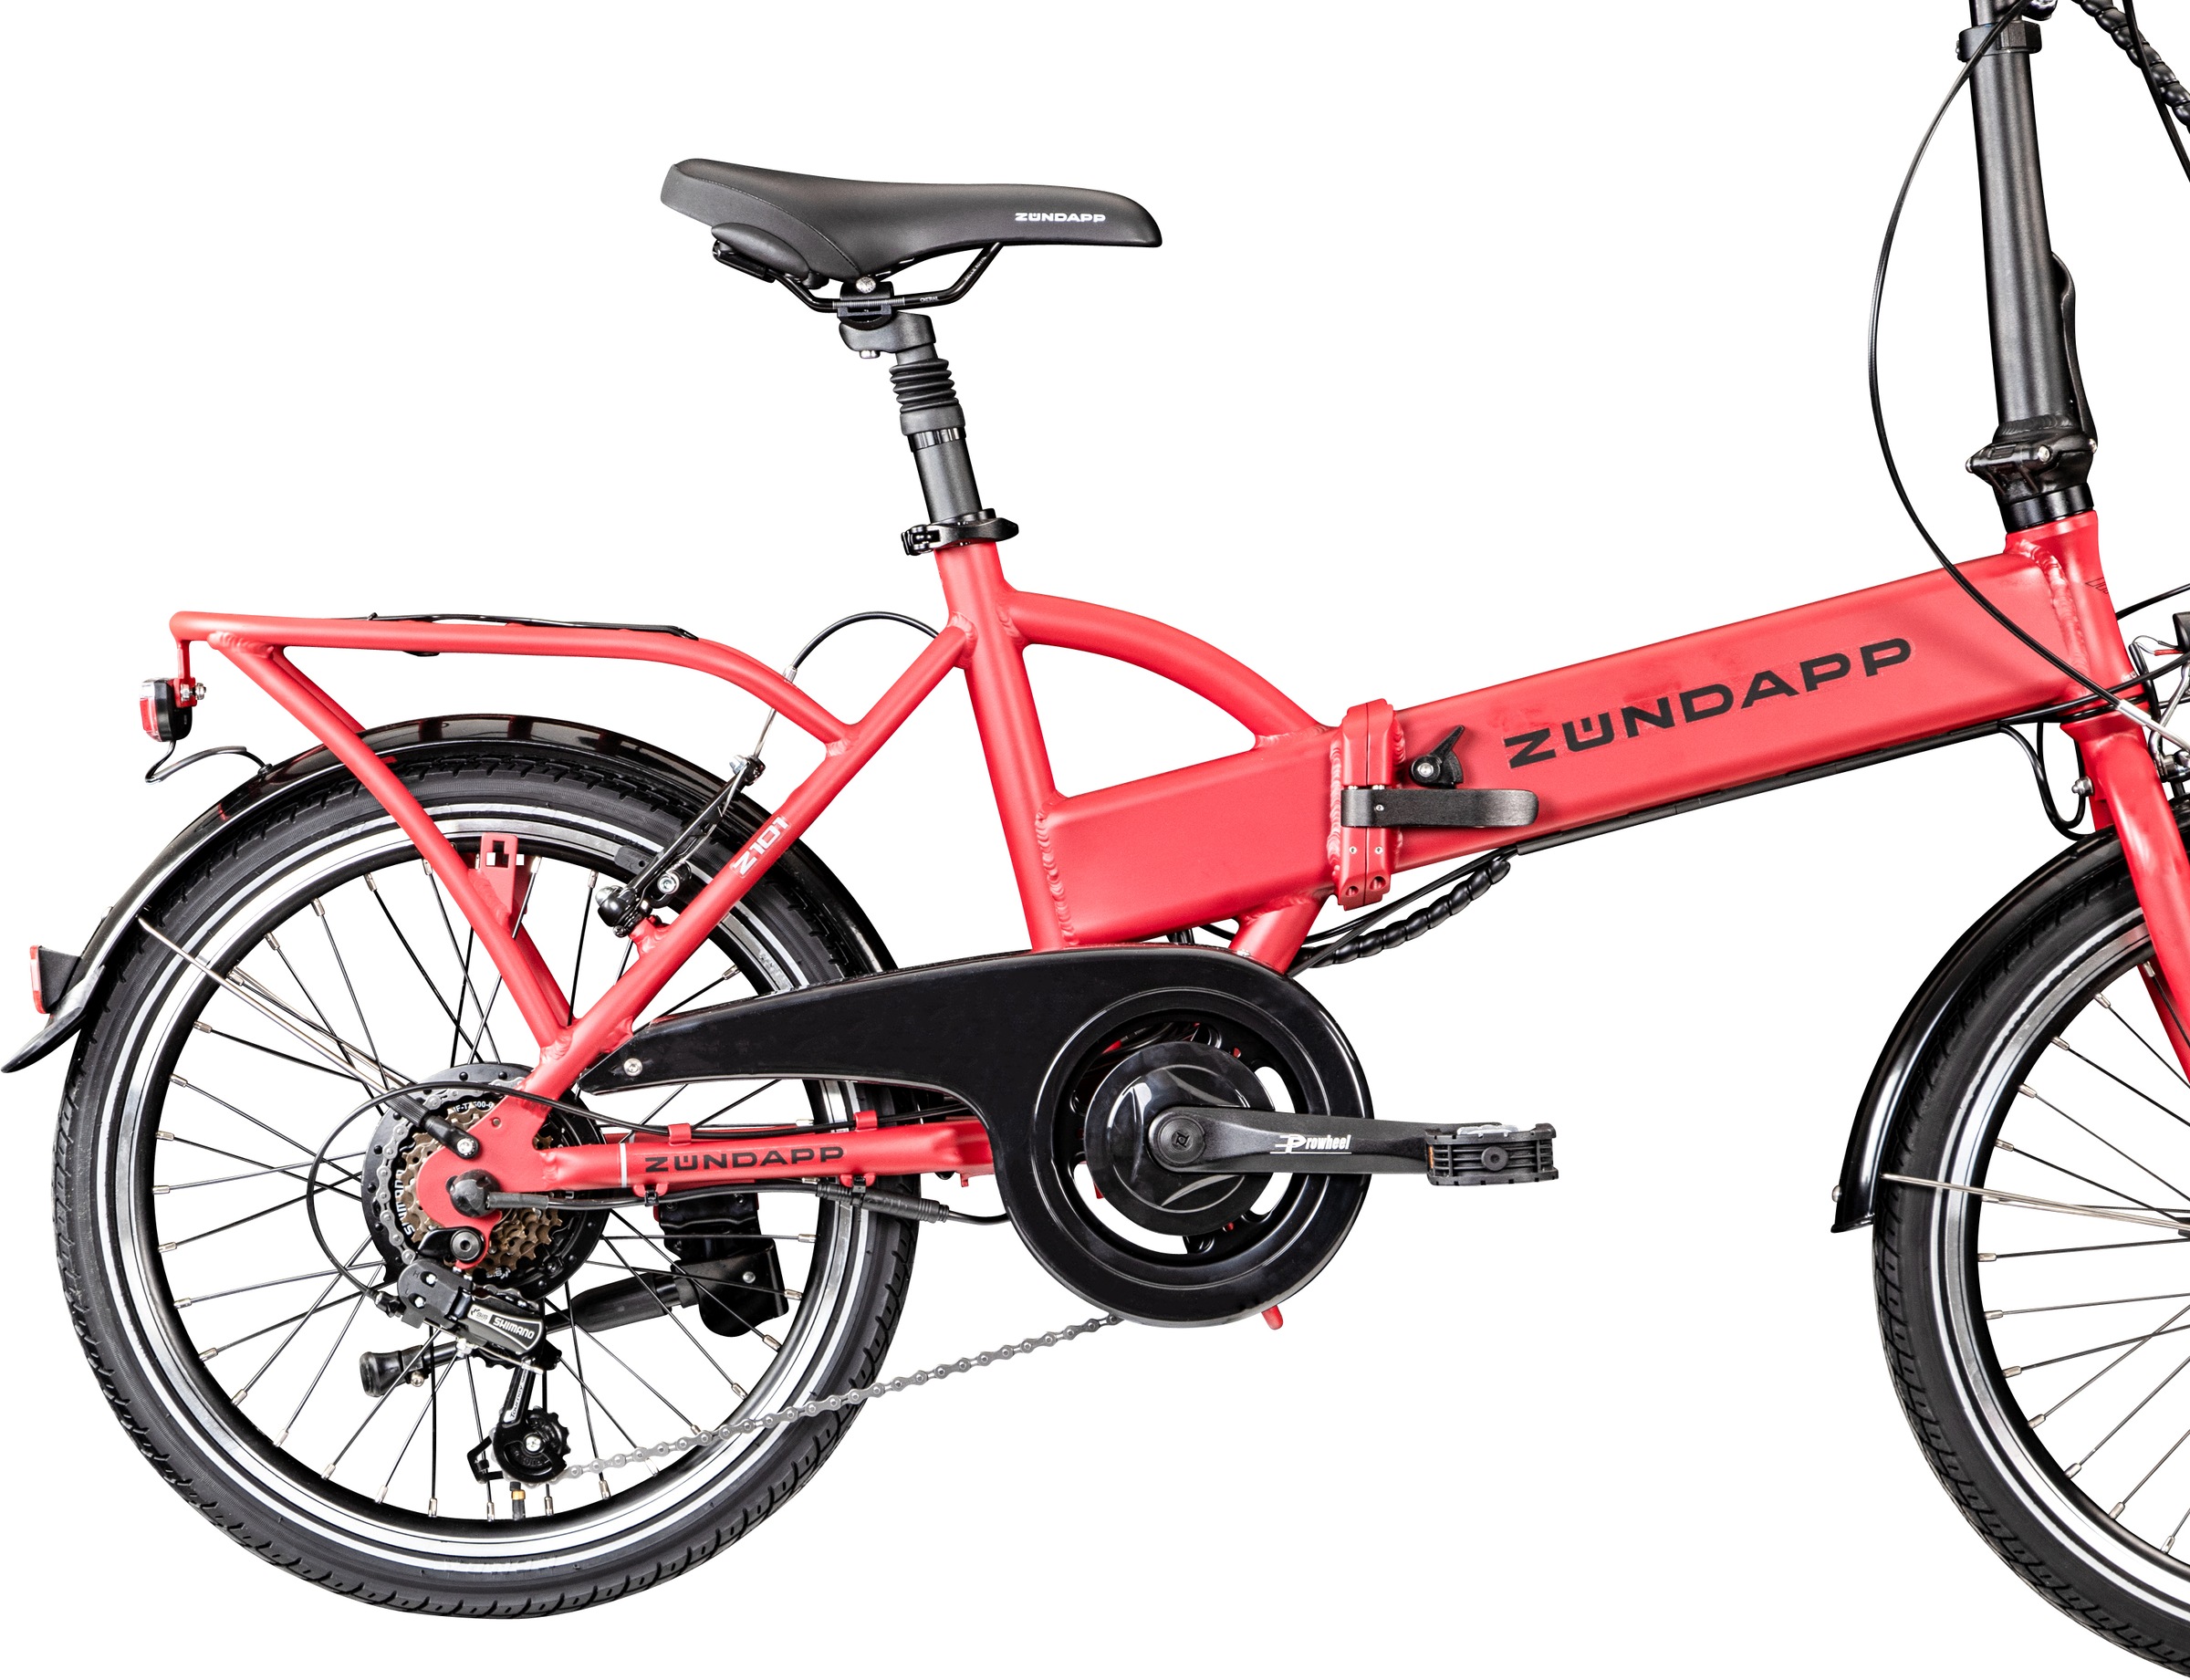 Heckmotor | E-Bike BAUR Tourney Gang, 250 Zündapp Shimano, W 6 »Z101«, RD-TY300,